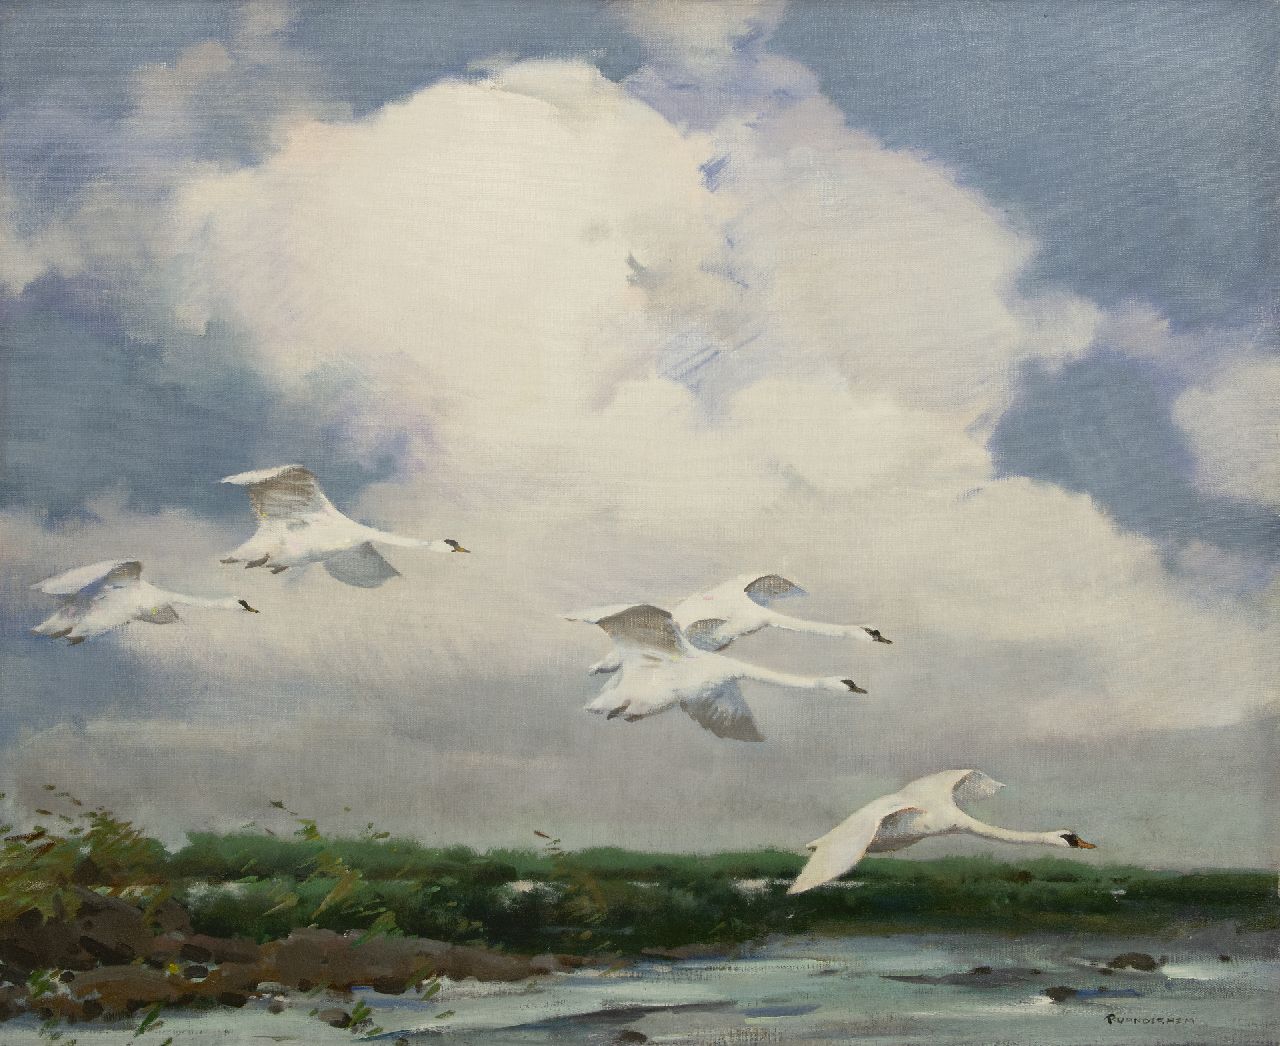 Hem P. van der | Pieter 'Piet' van der Hem, Flying swans above a lake, oil on canvas 101.2 x 123.2 cm, signed l.r.